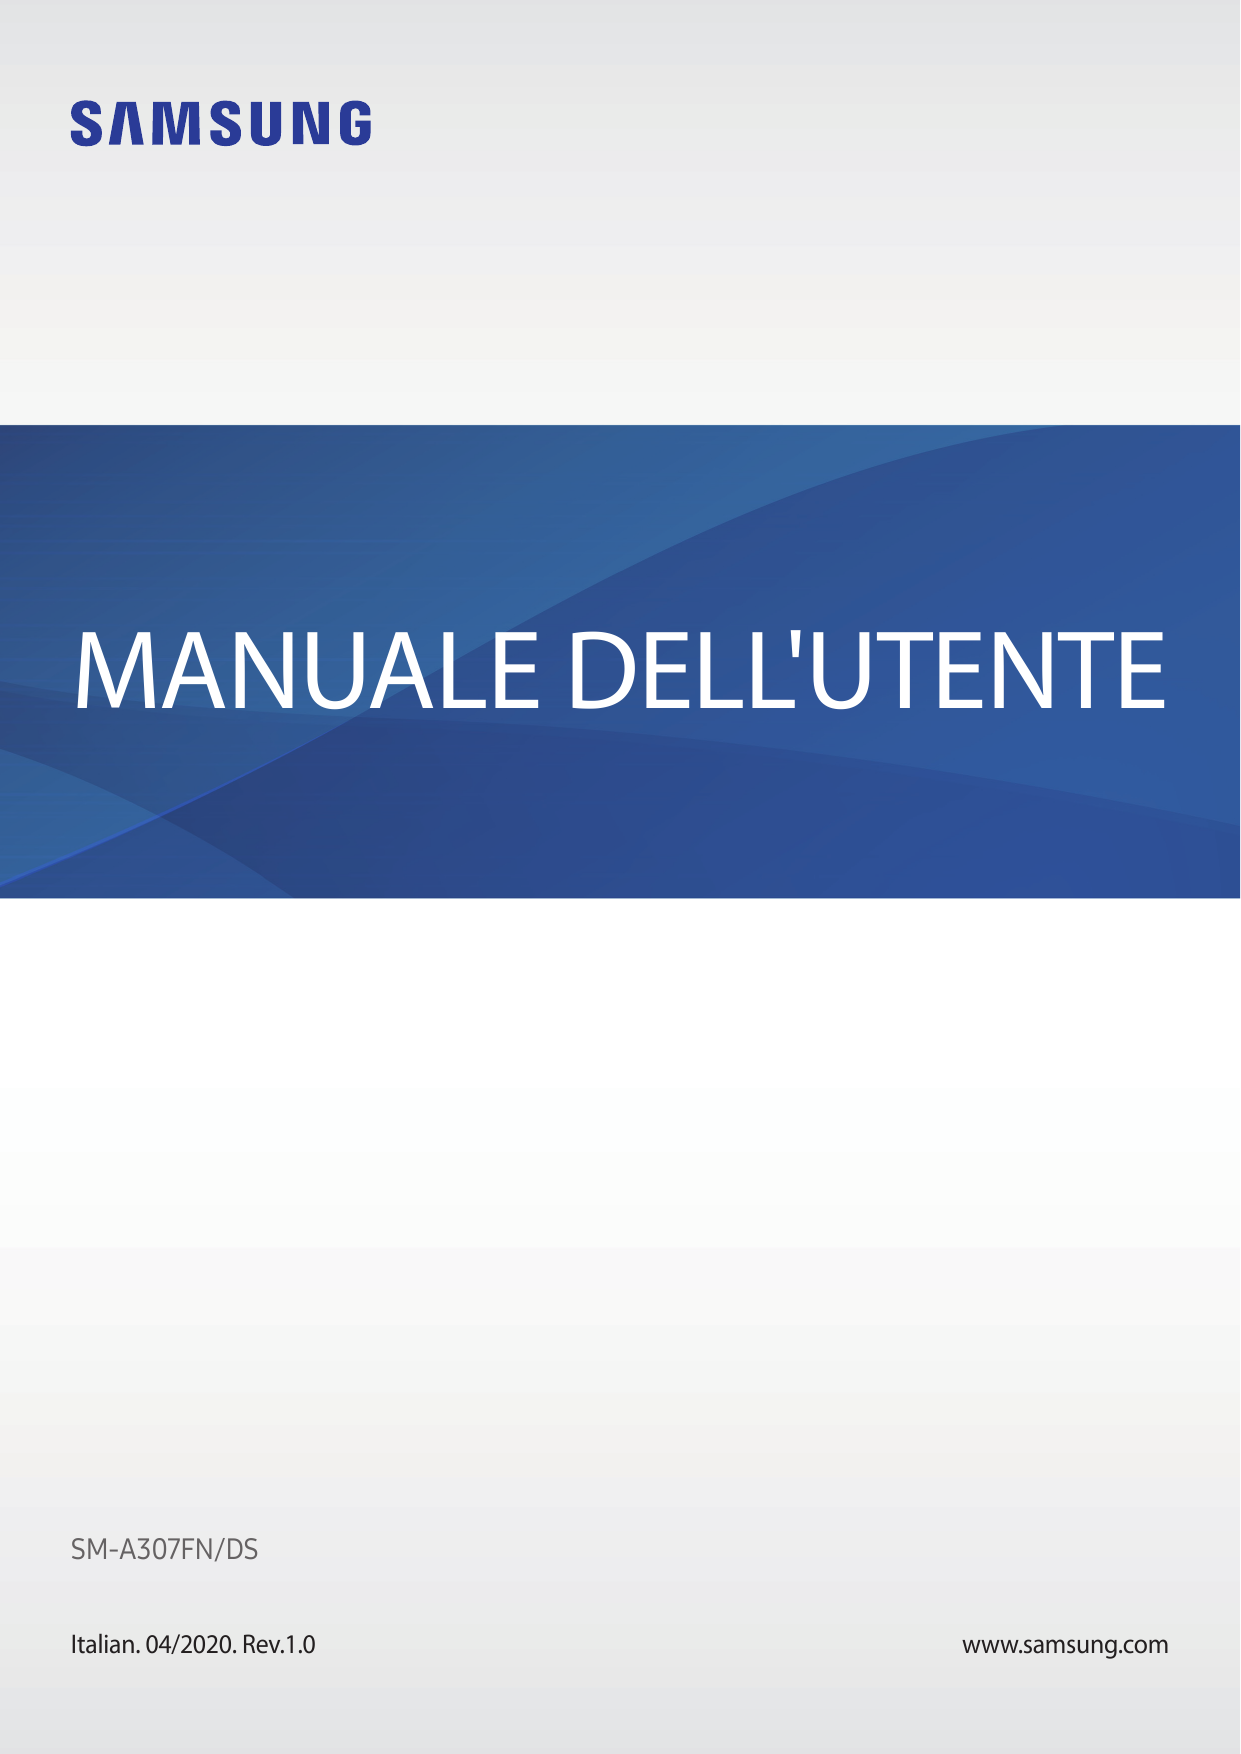 MANUALE DELL'UTENTESM-A307FN/DSItalian. 04/2020. Rev.1.0www.samsung.com